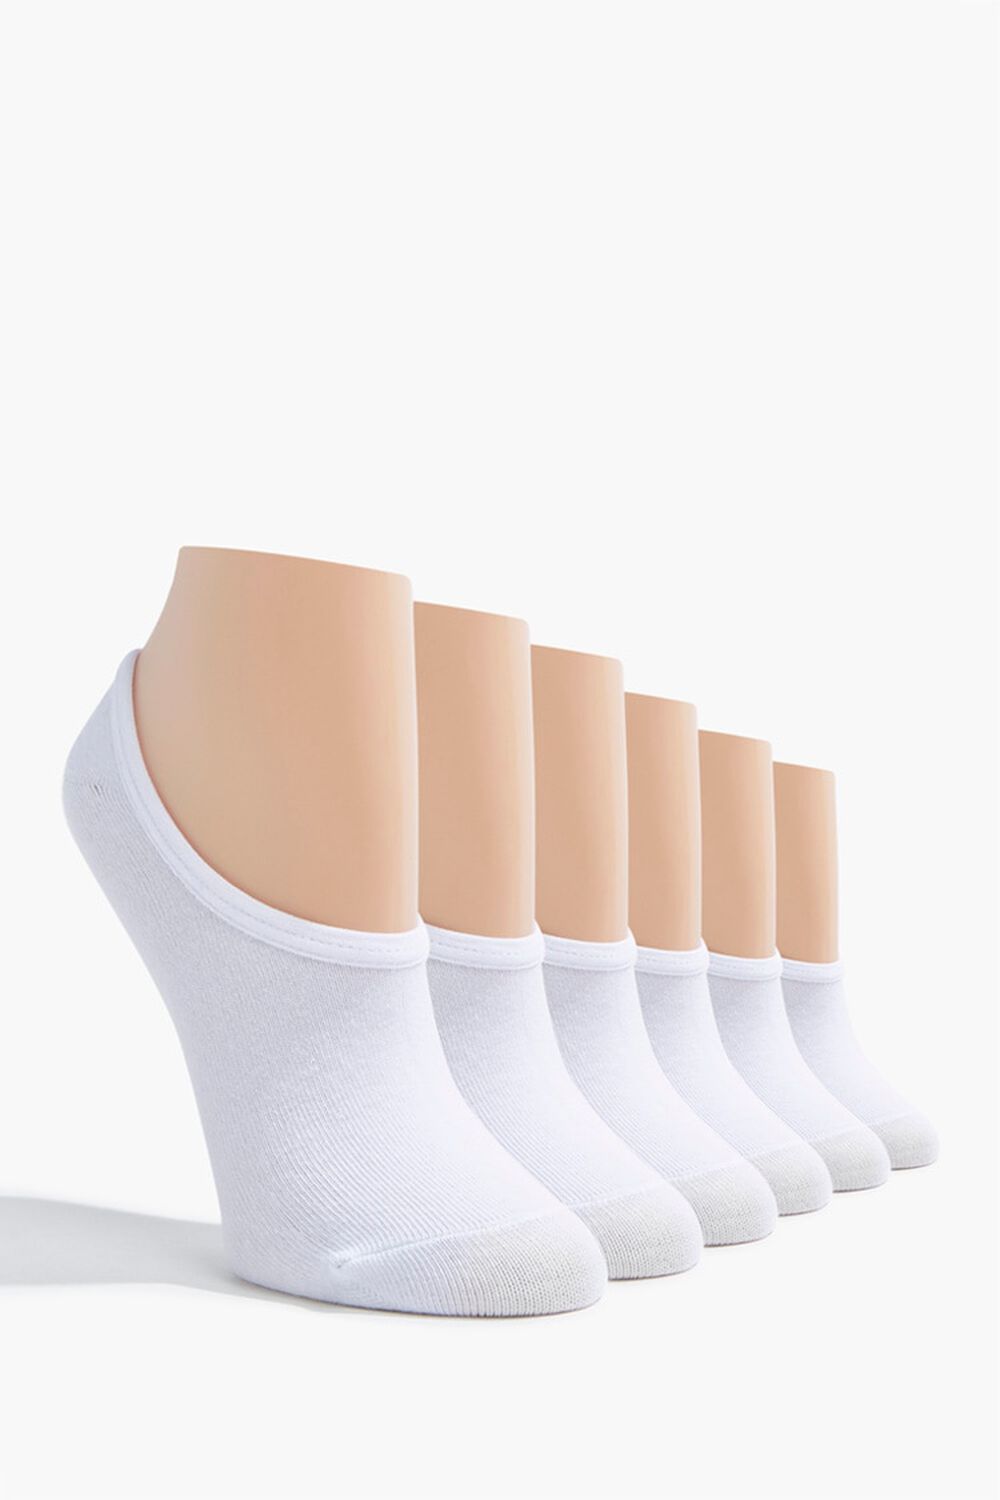 No-Show Socks - 3 Pack, image 1